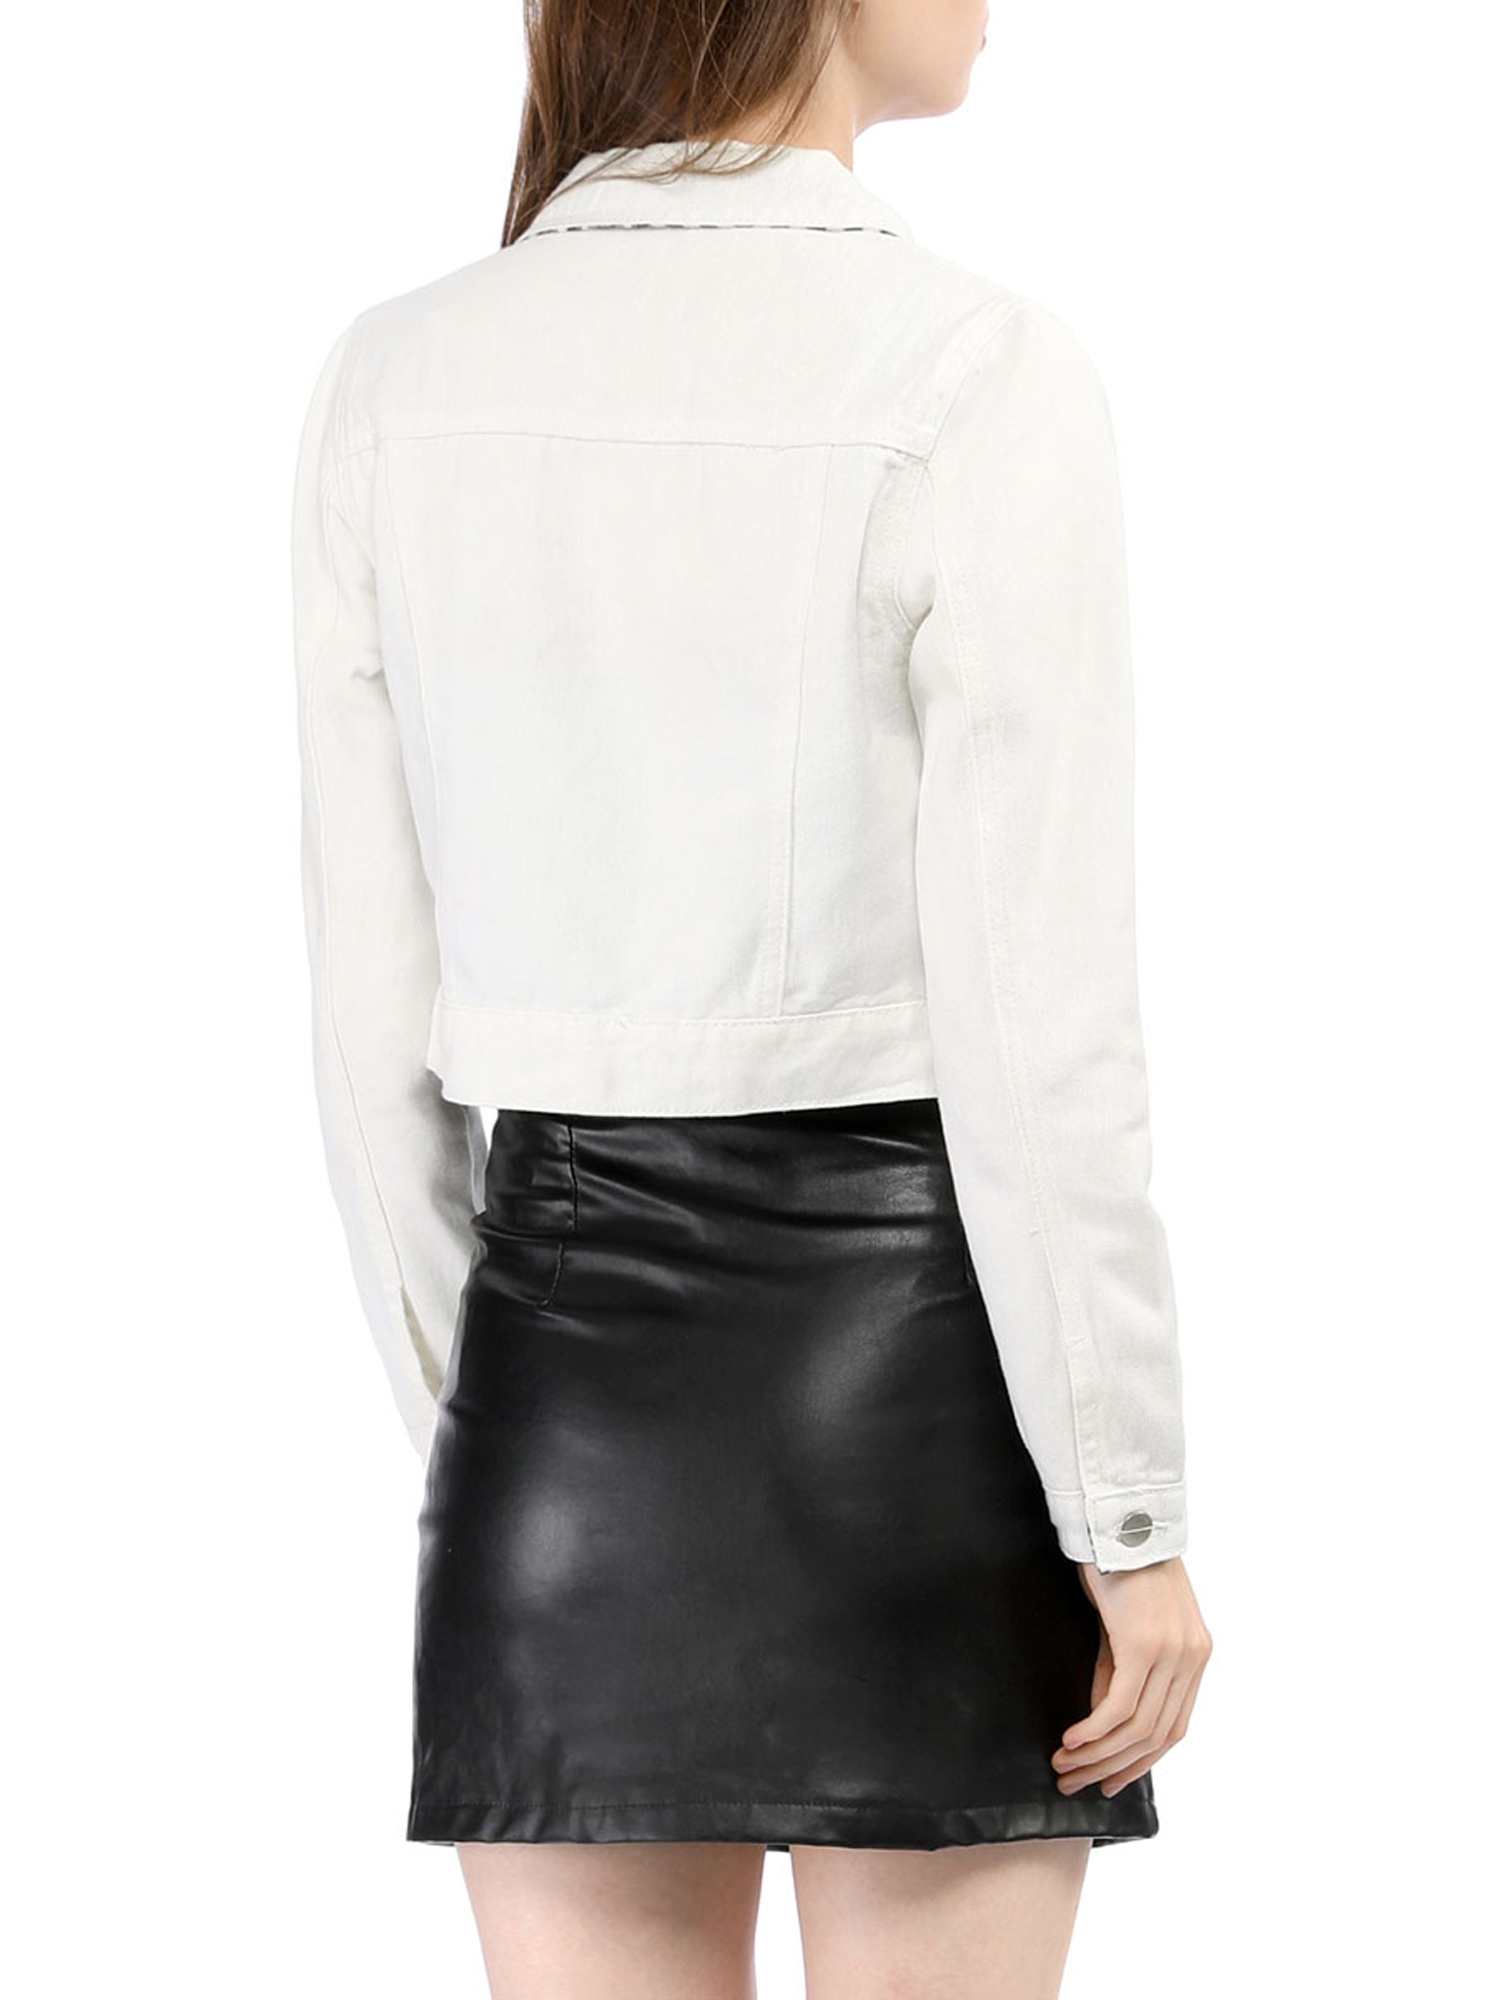 Unique Bargains Women's Button Down Long Sleeve Cropped Denim Jacket XL White - image 4 of 8